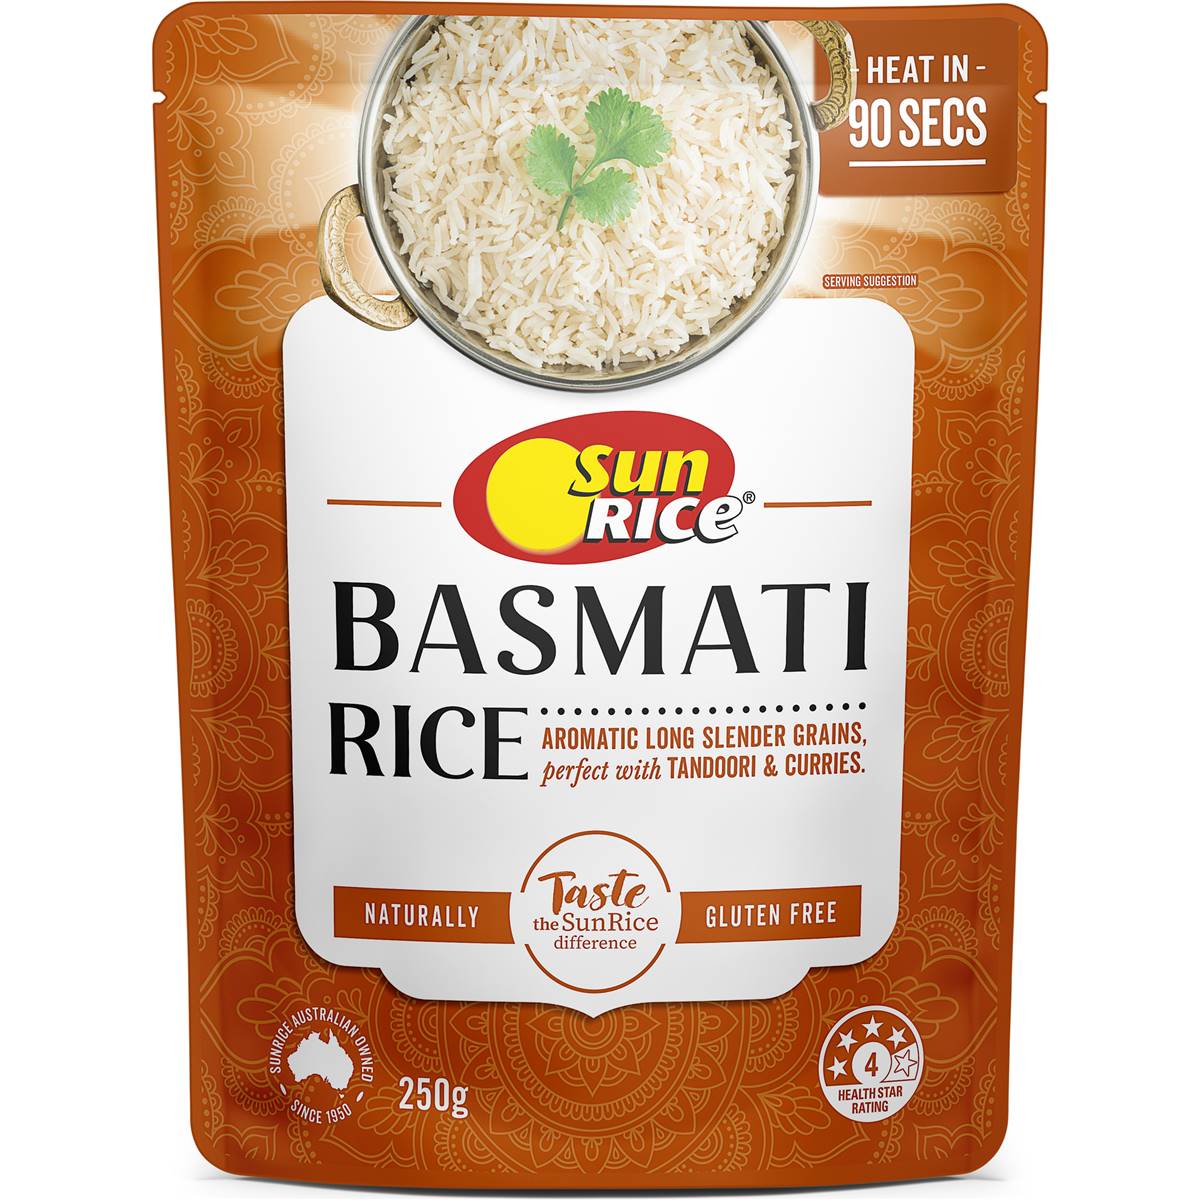 Calories in Sunrice Microwave Basmati Rice Indian Basmati Rice